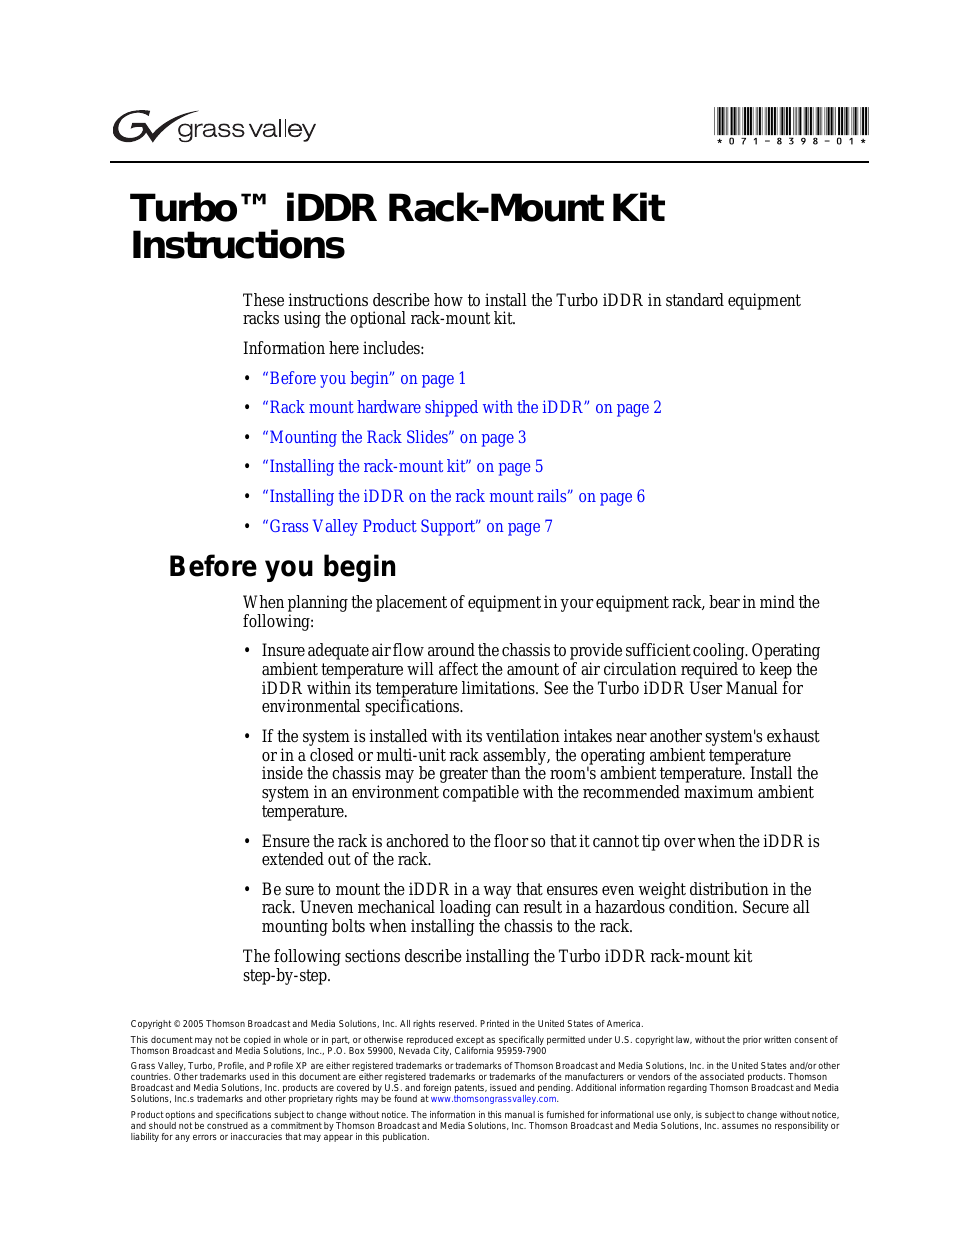 Turbo iDDR Rack-Mount Kit